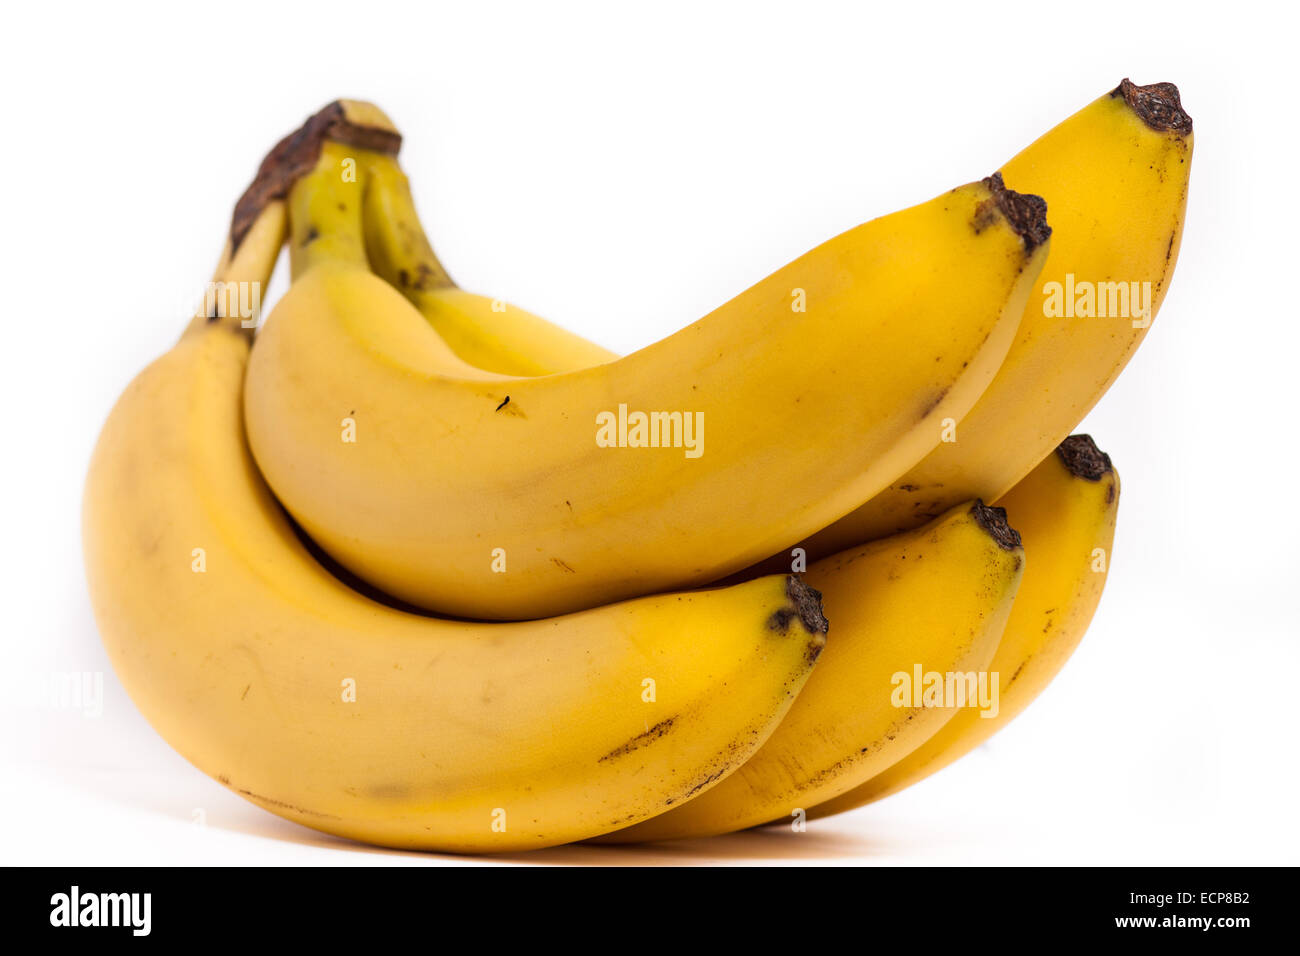 Cavendish banane -Fotos und -Bildmaterial in hoher Auflösung – Alamy